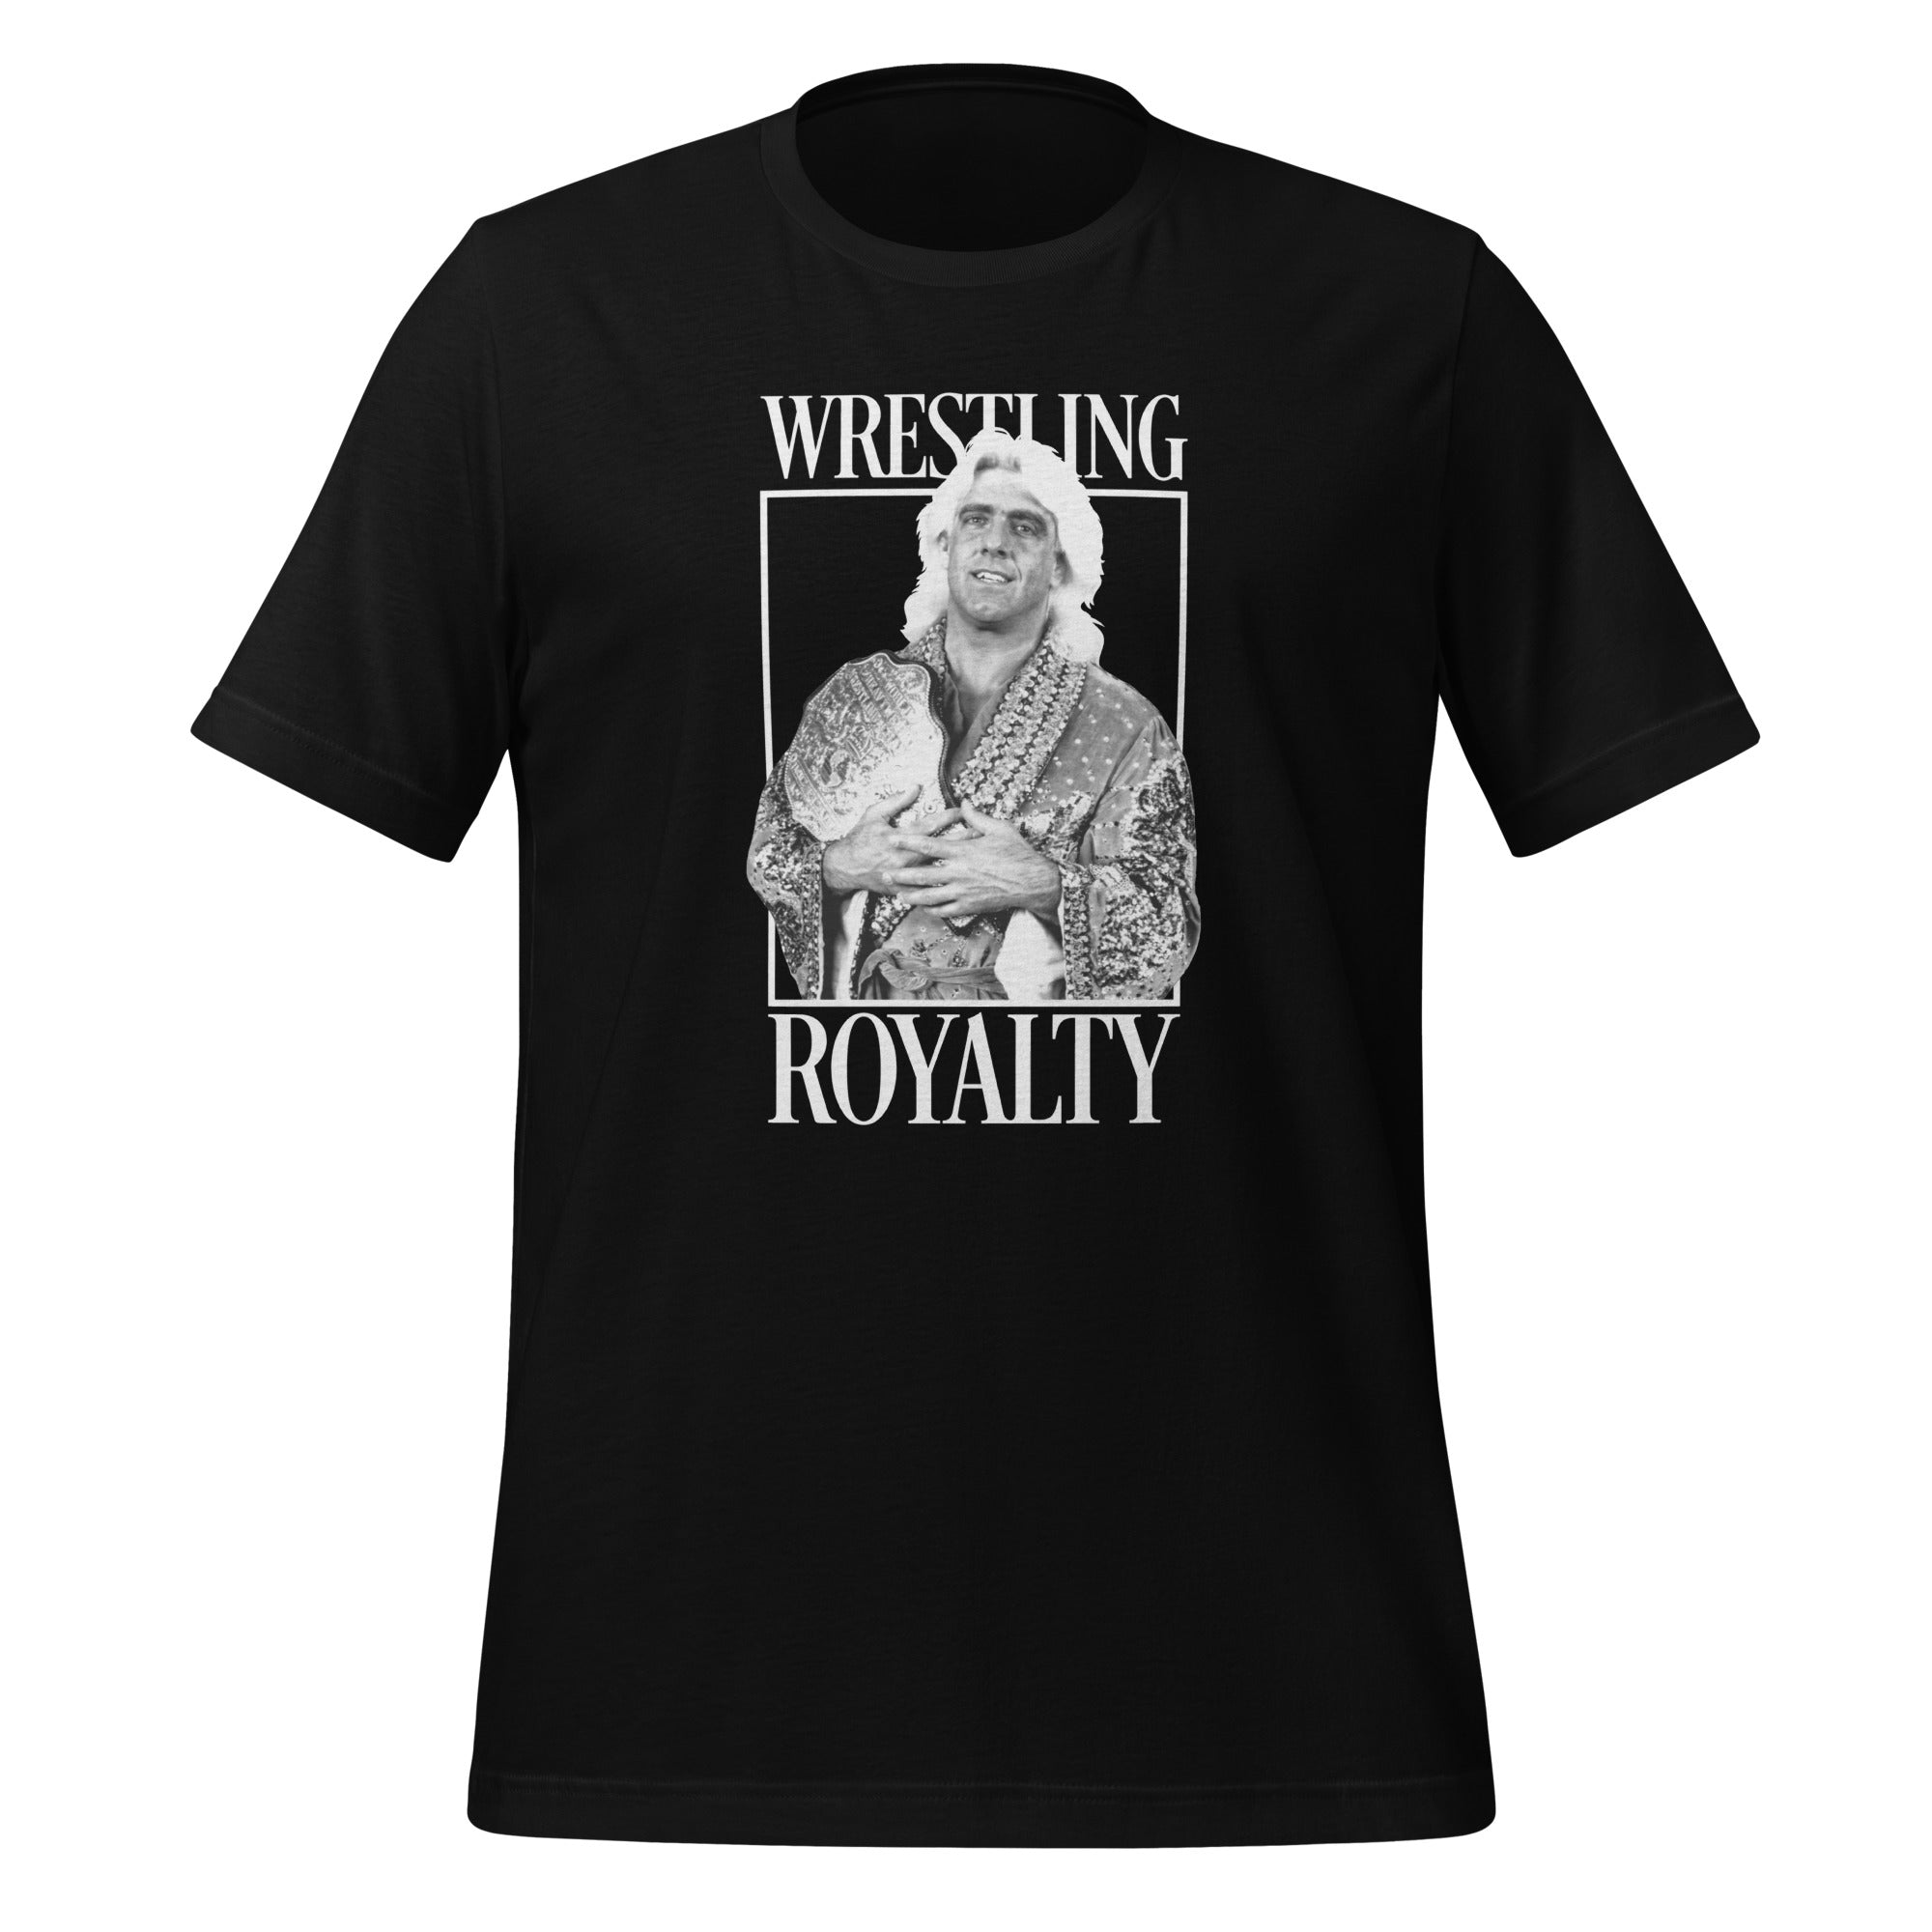 Wrestling Royalty Shirt